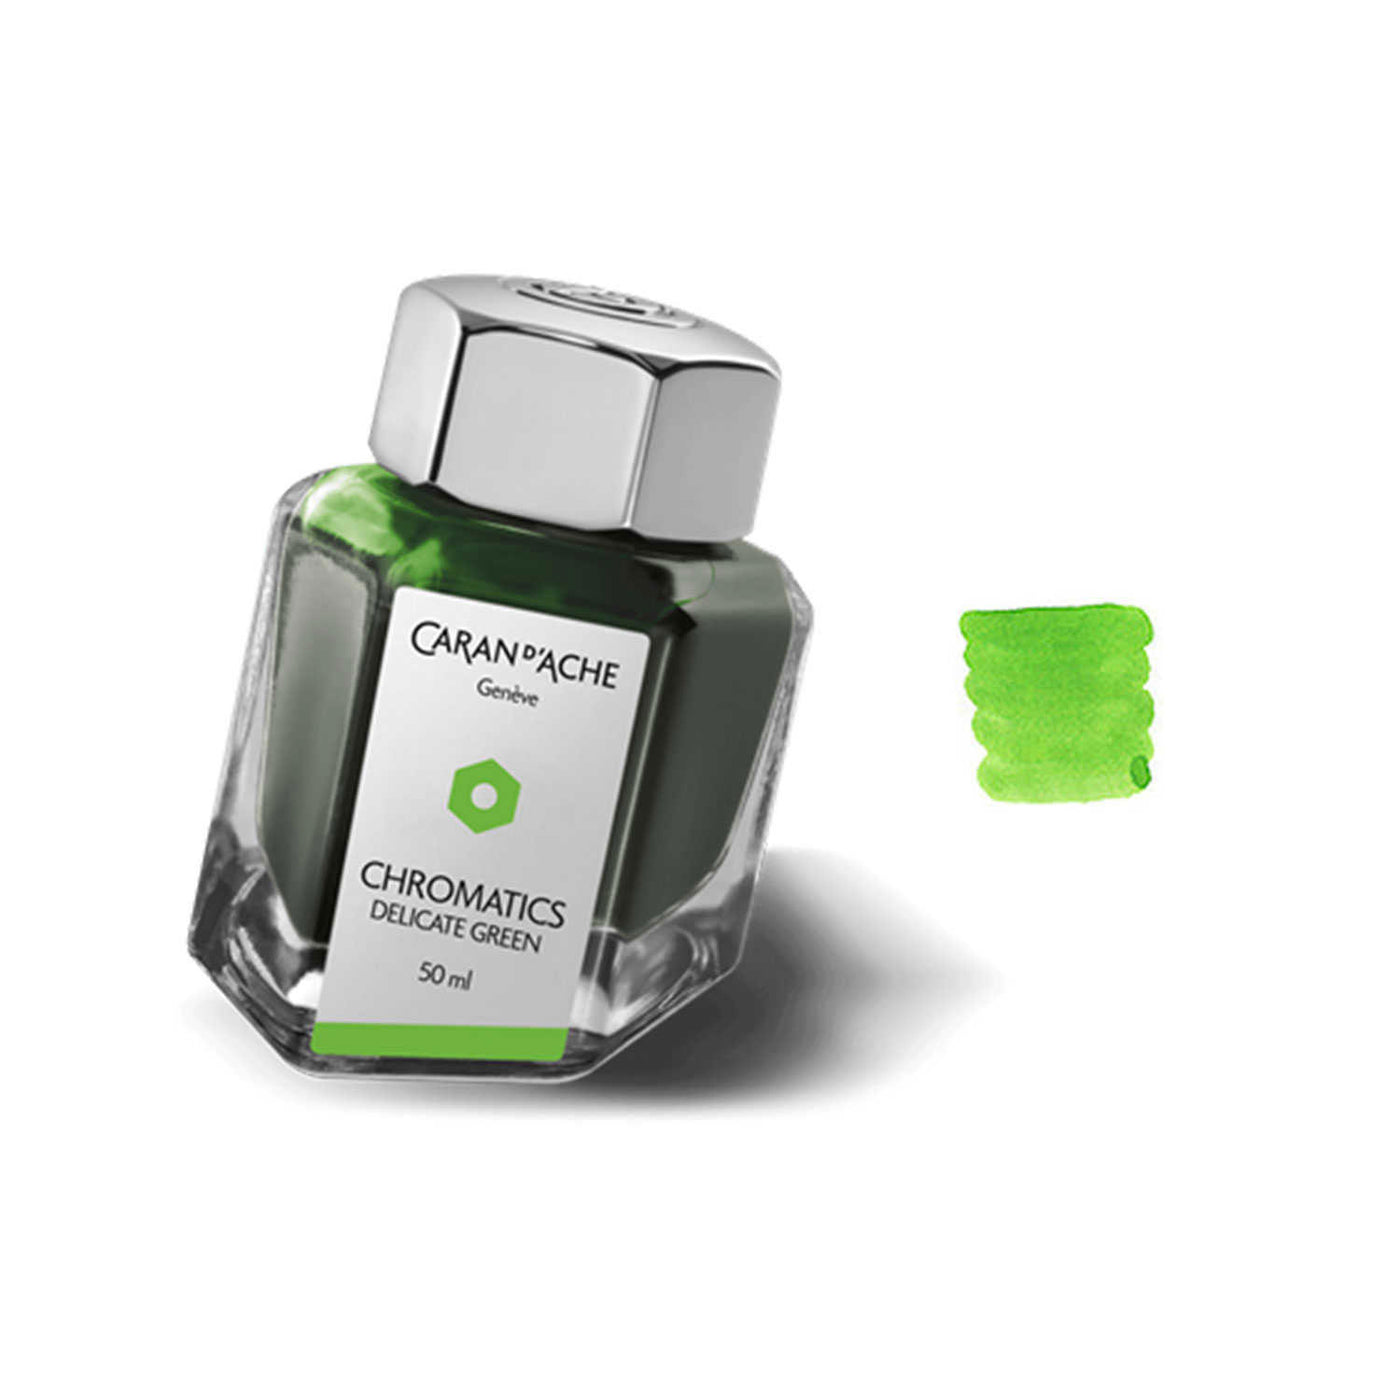 Caran d' Ache Chromatics Ink Bottle, Delicate Green - 50ml